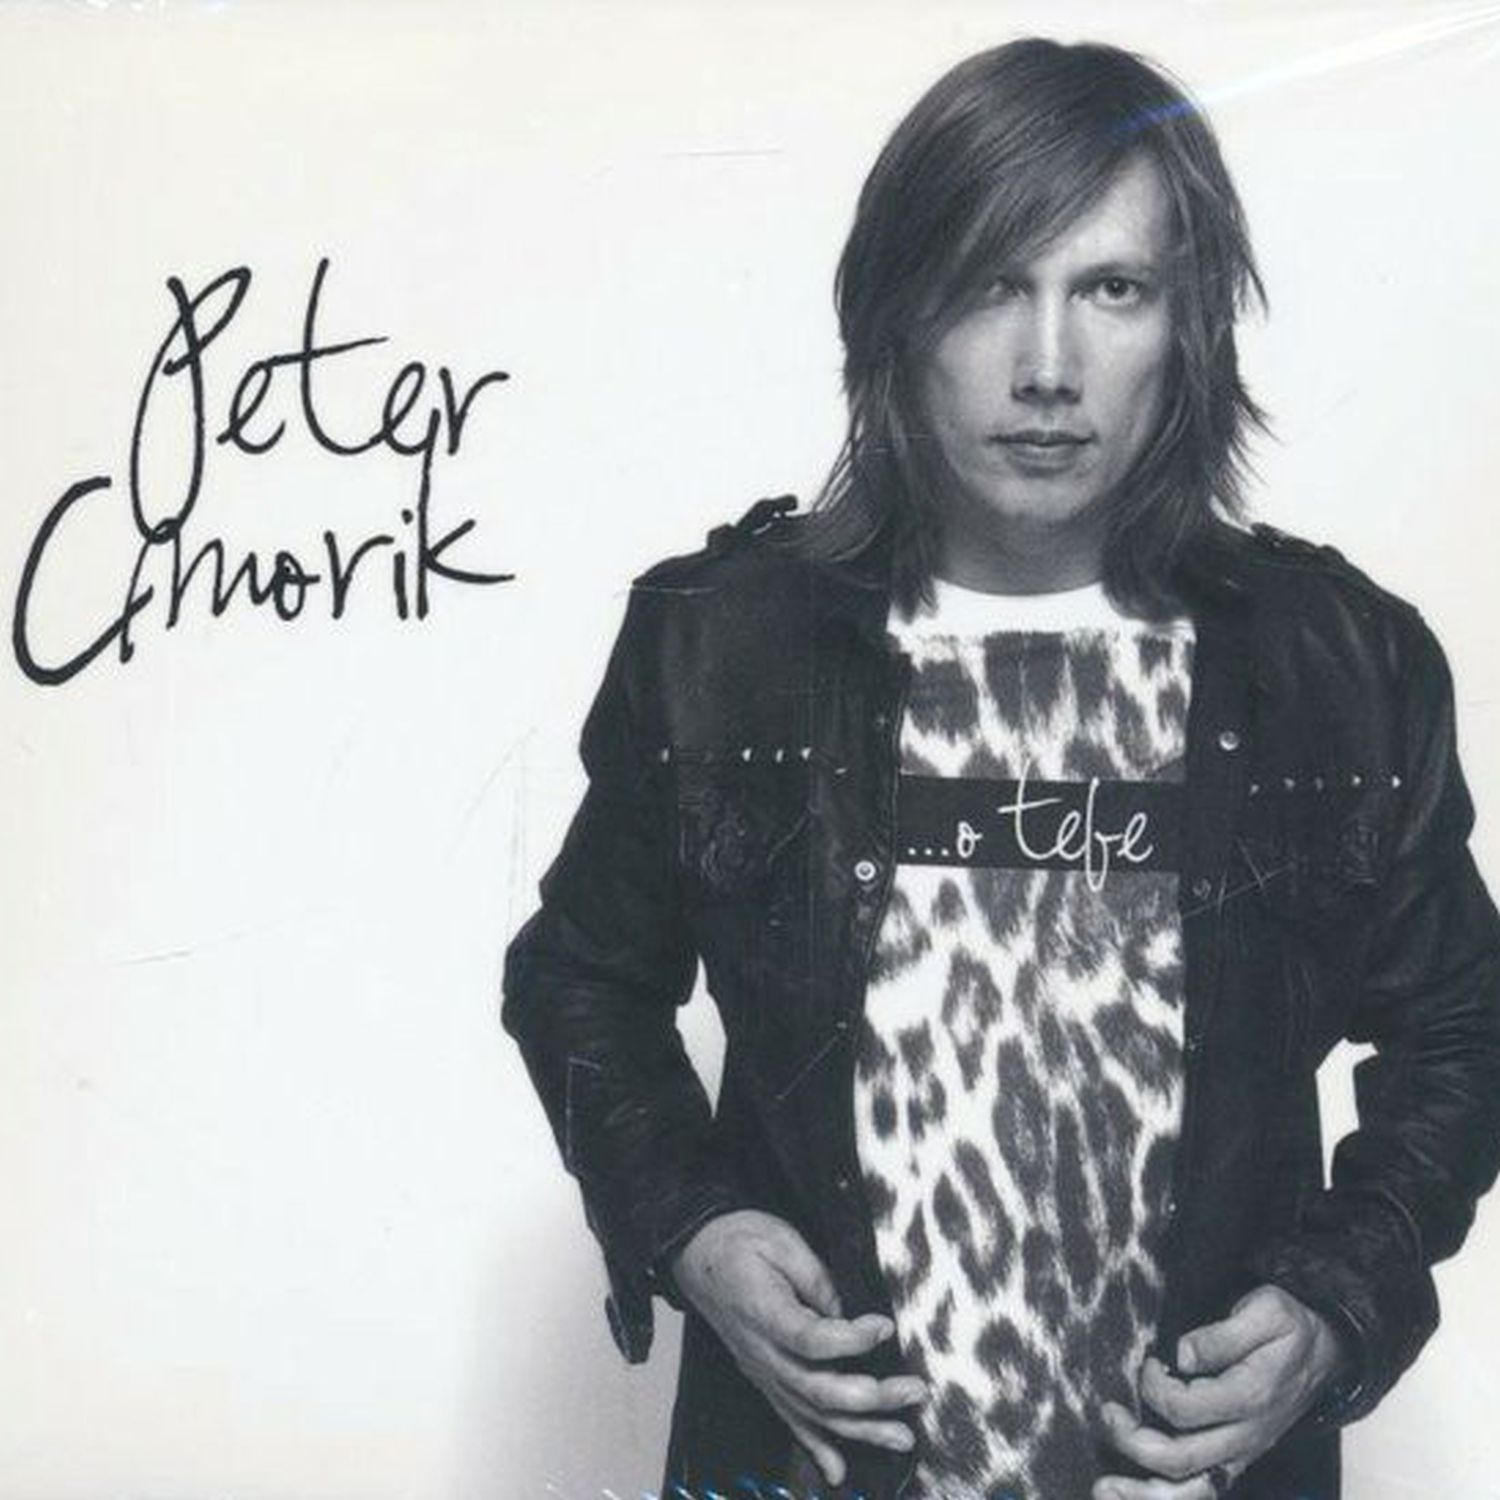 CD Shop - CMORIK PETER ...O TEBE